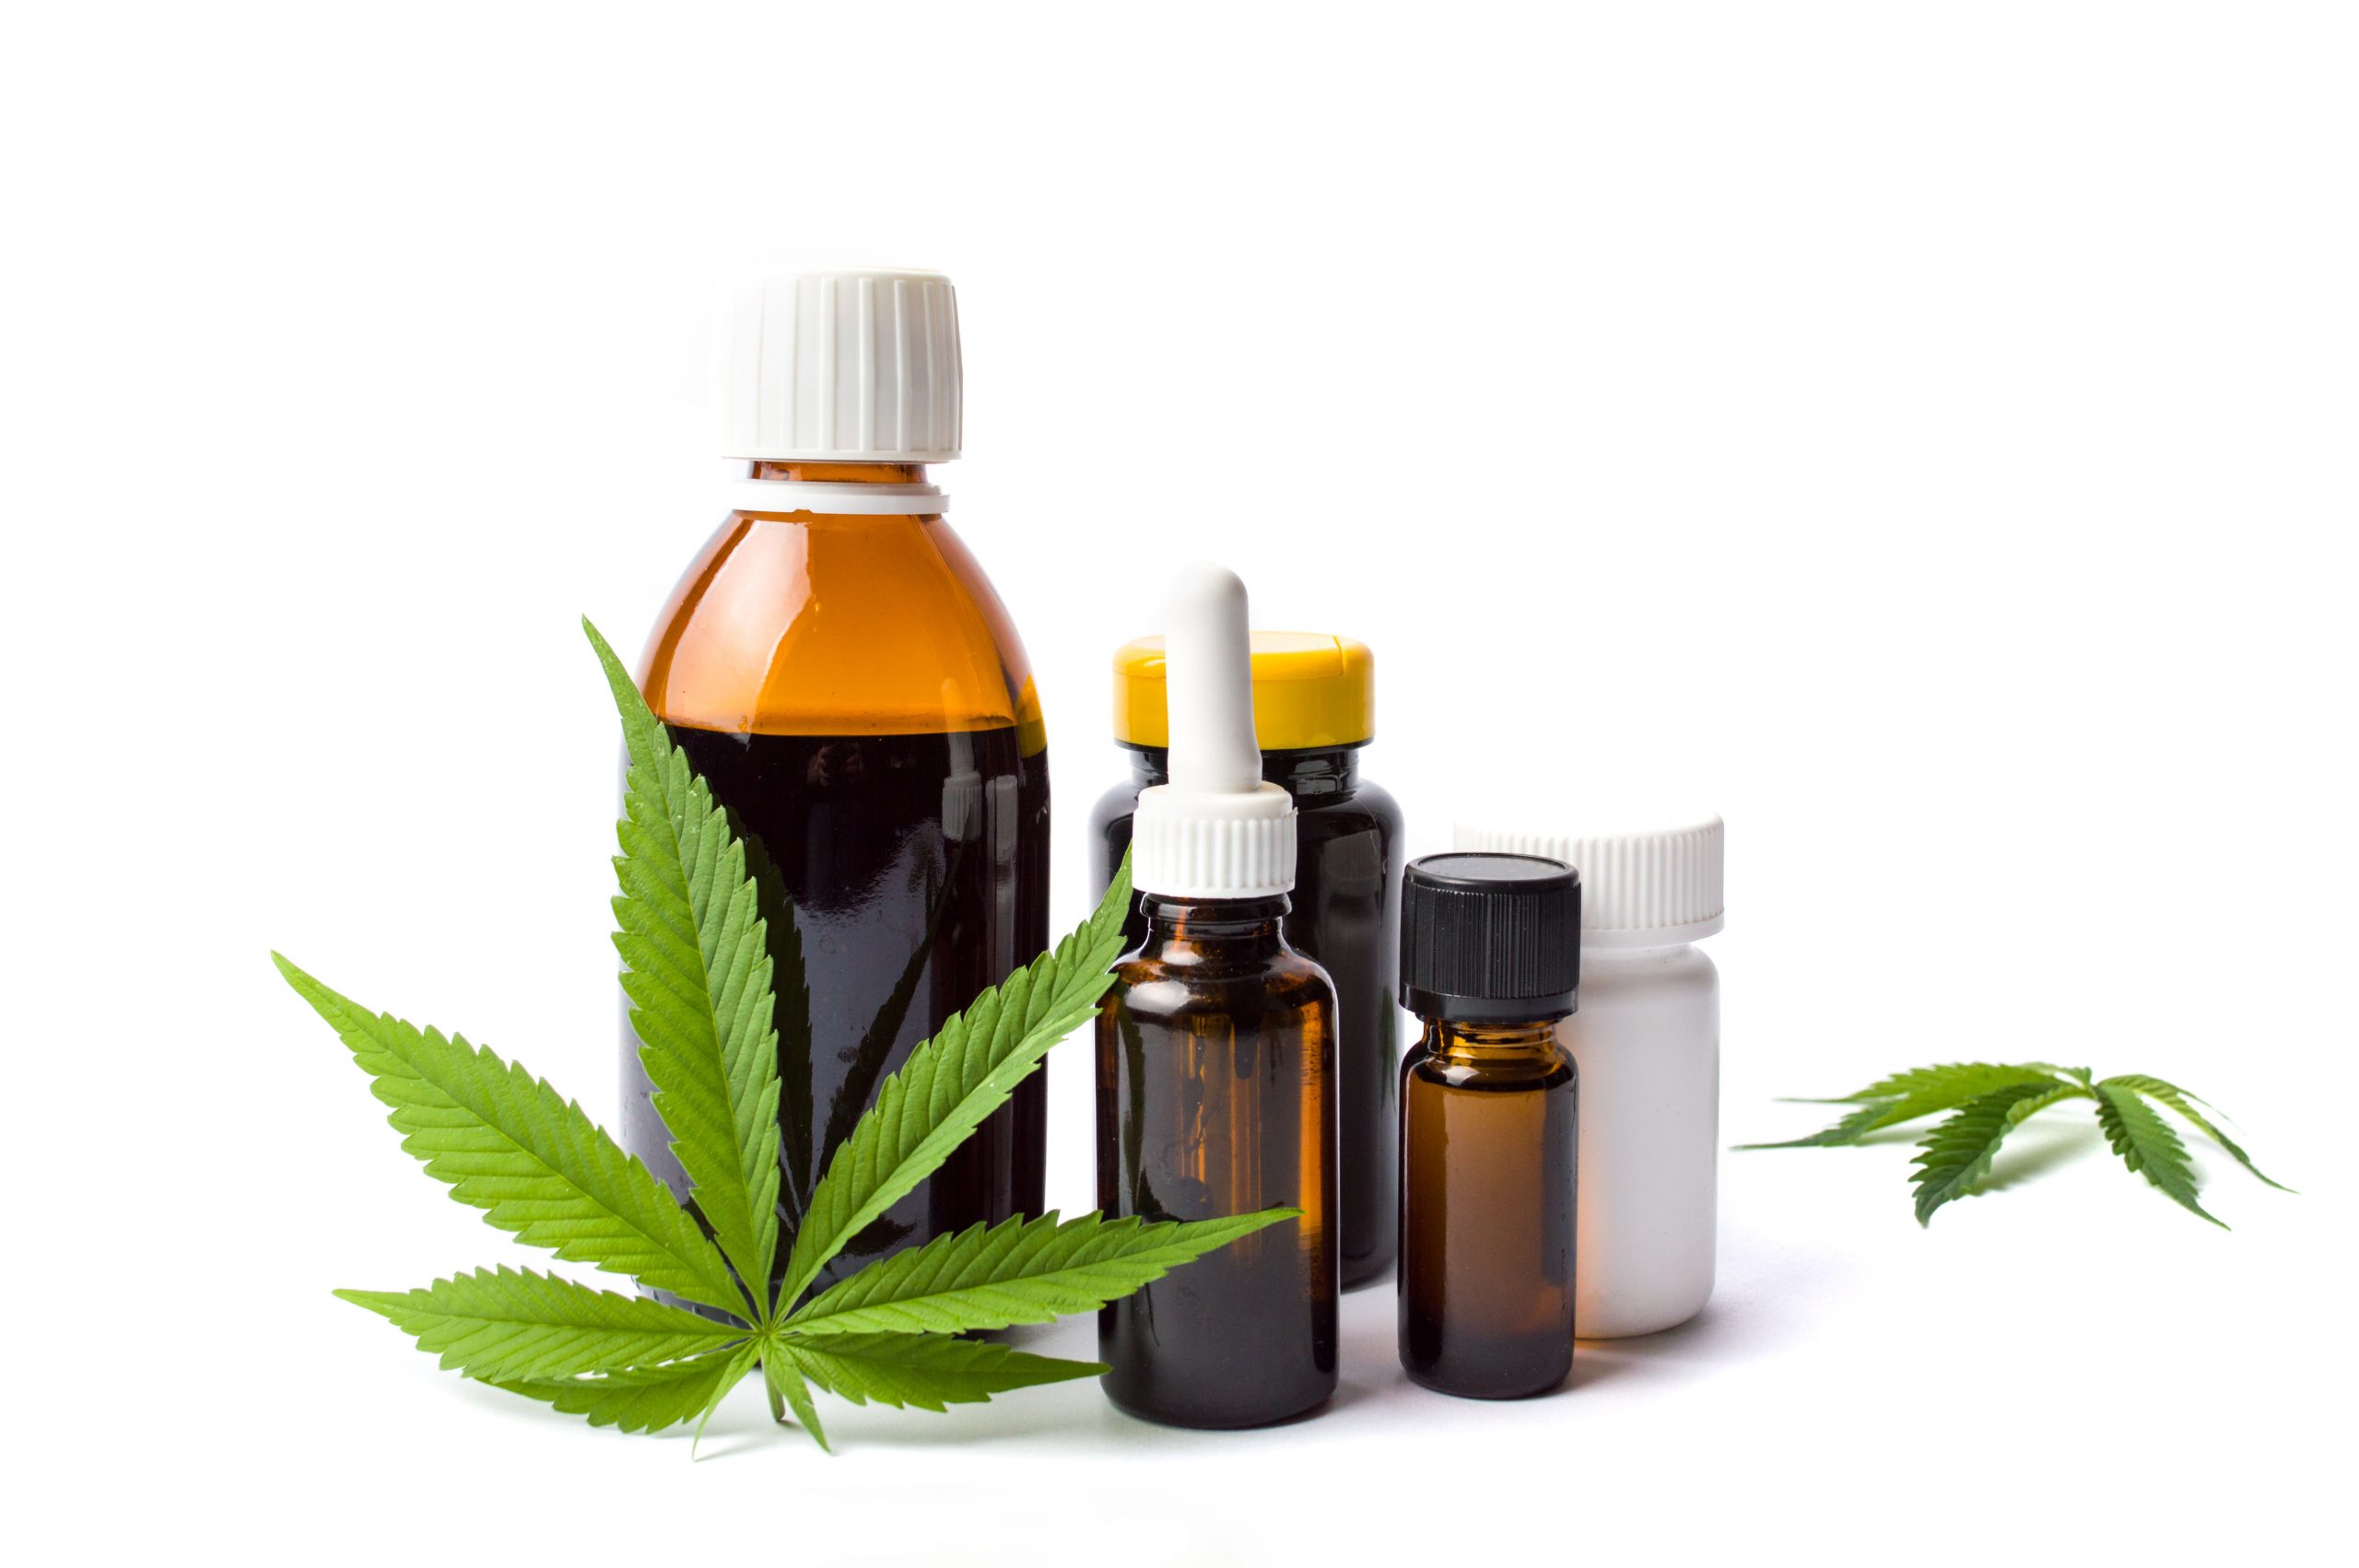 A green cannabis leaf is stood against a brown medicine bottle